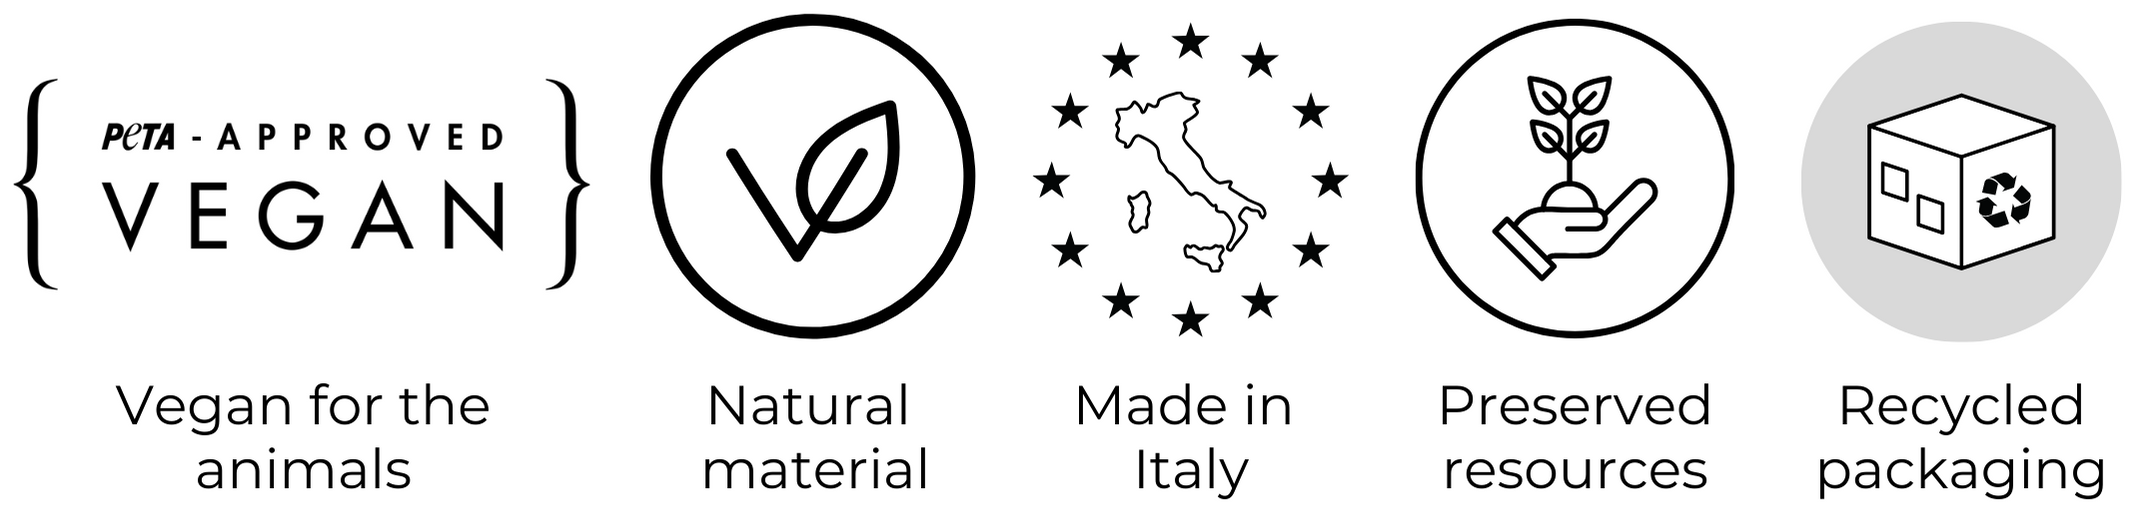 Made in Italy - Vegan